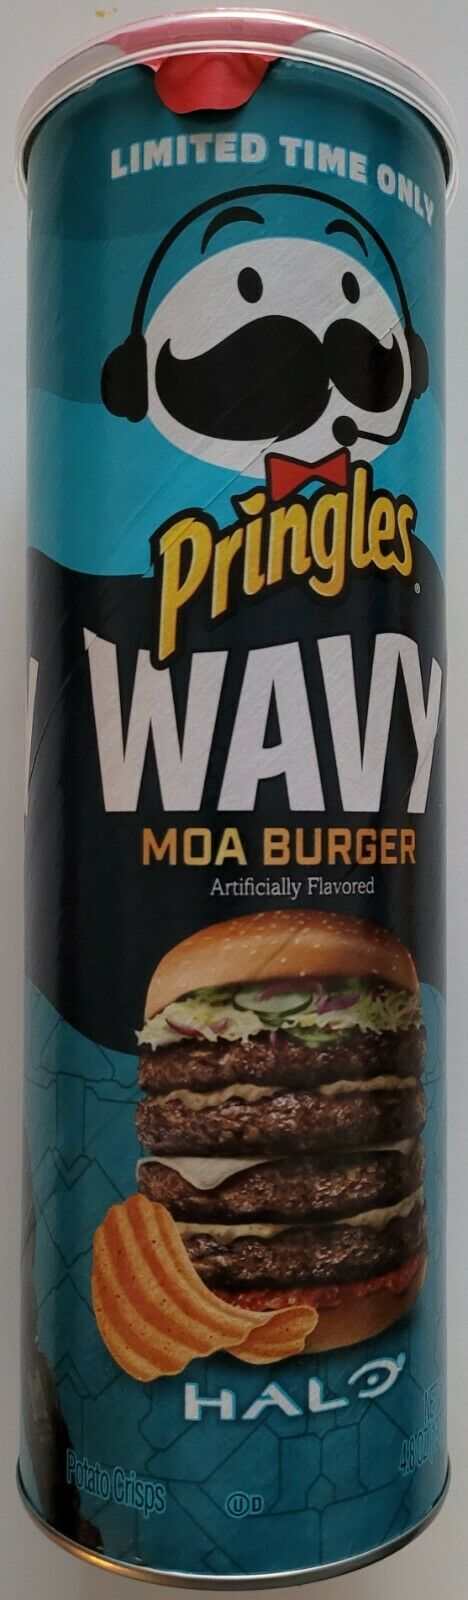 New Limited Edition Halo Pringles Wavy Moa Burger Flavor Potato Chips 5.5 Oz